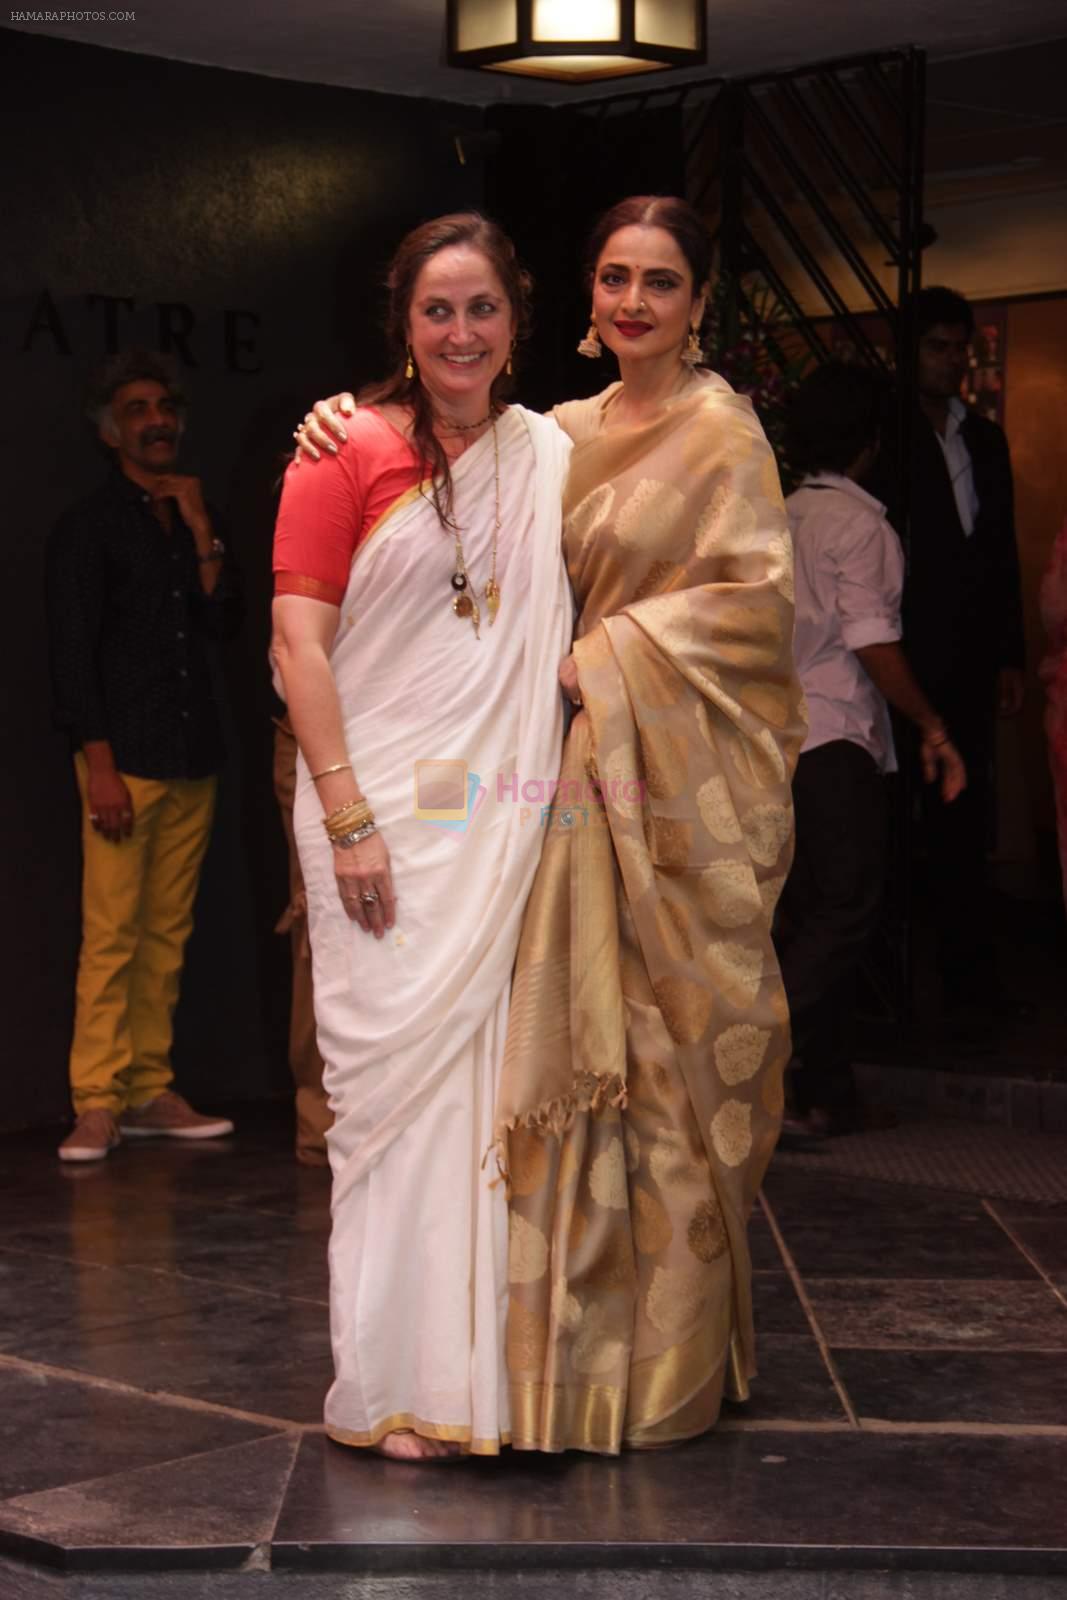 Rekha ta Shashi Kapoor felicitation at Prithvi theatre in Mumbai on 10th May 2015